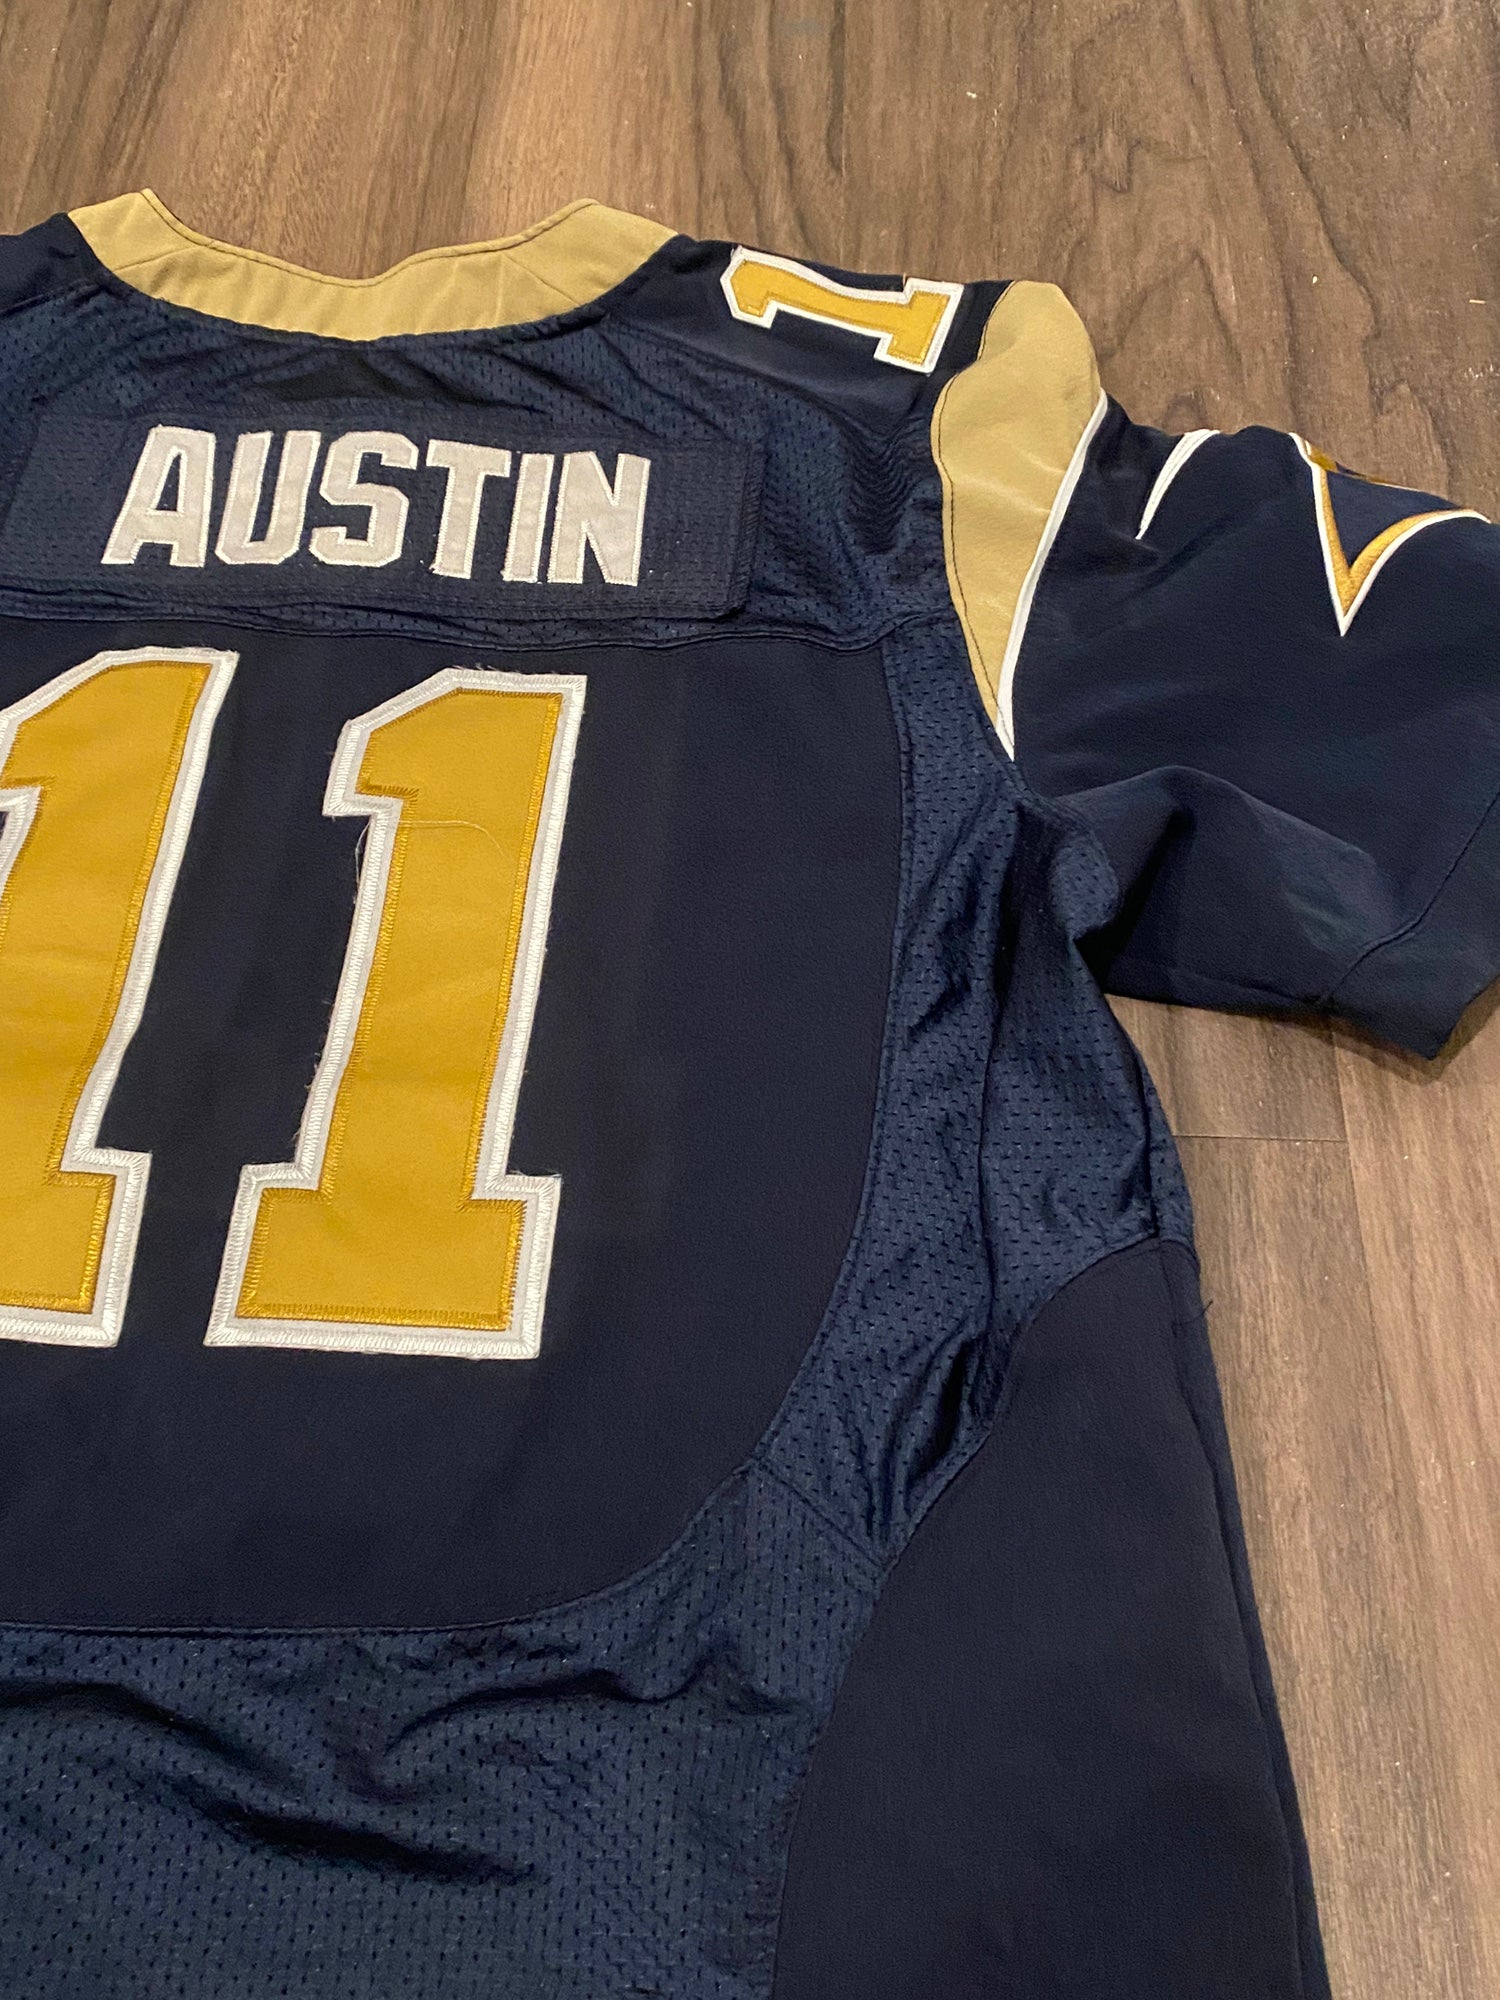 St Louis Rams NFL Tavon Austin Nike Authentic Replica Jersey Adult Large